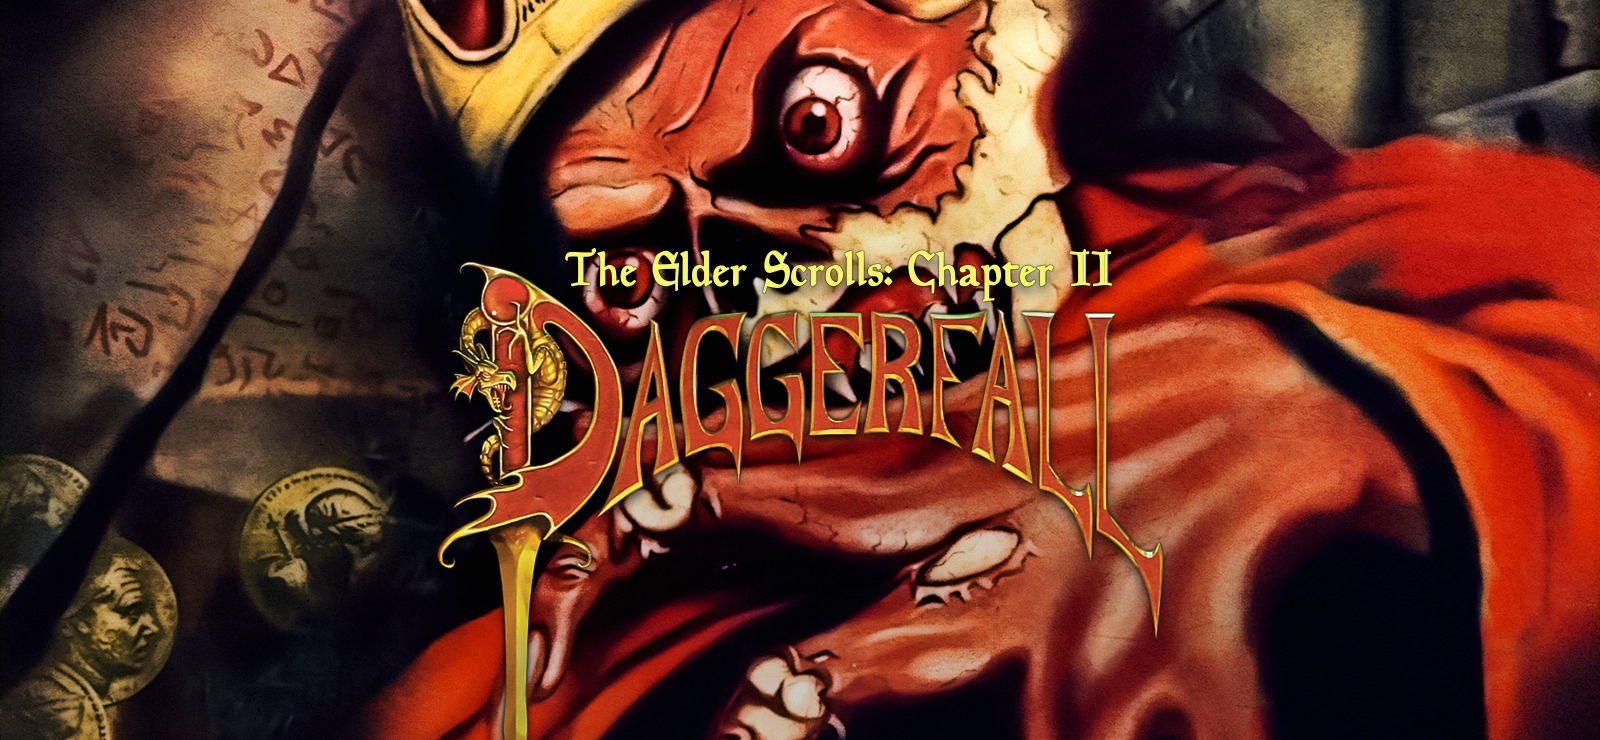 The Elder Scrolls: Daggerfall